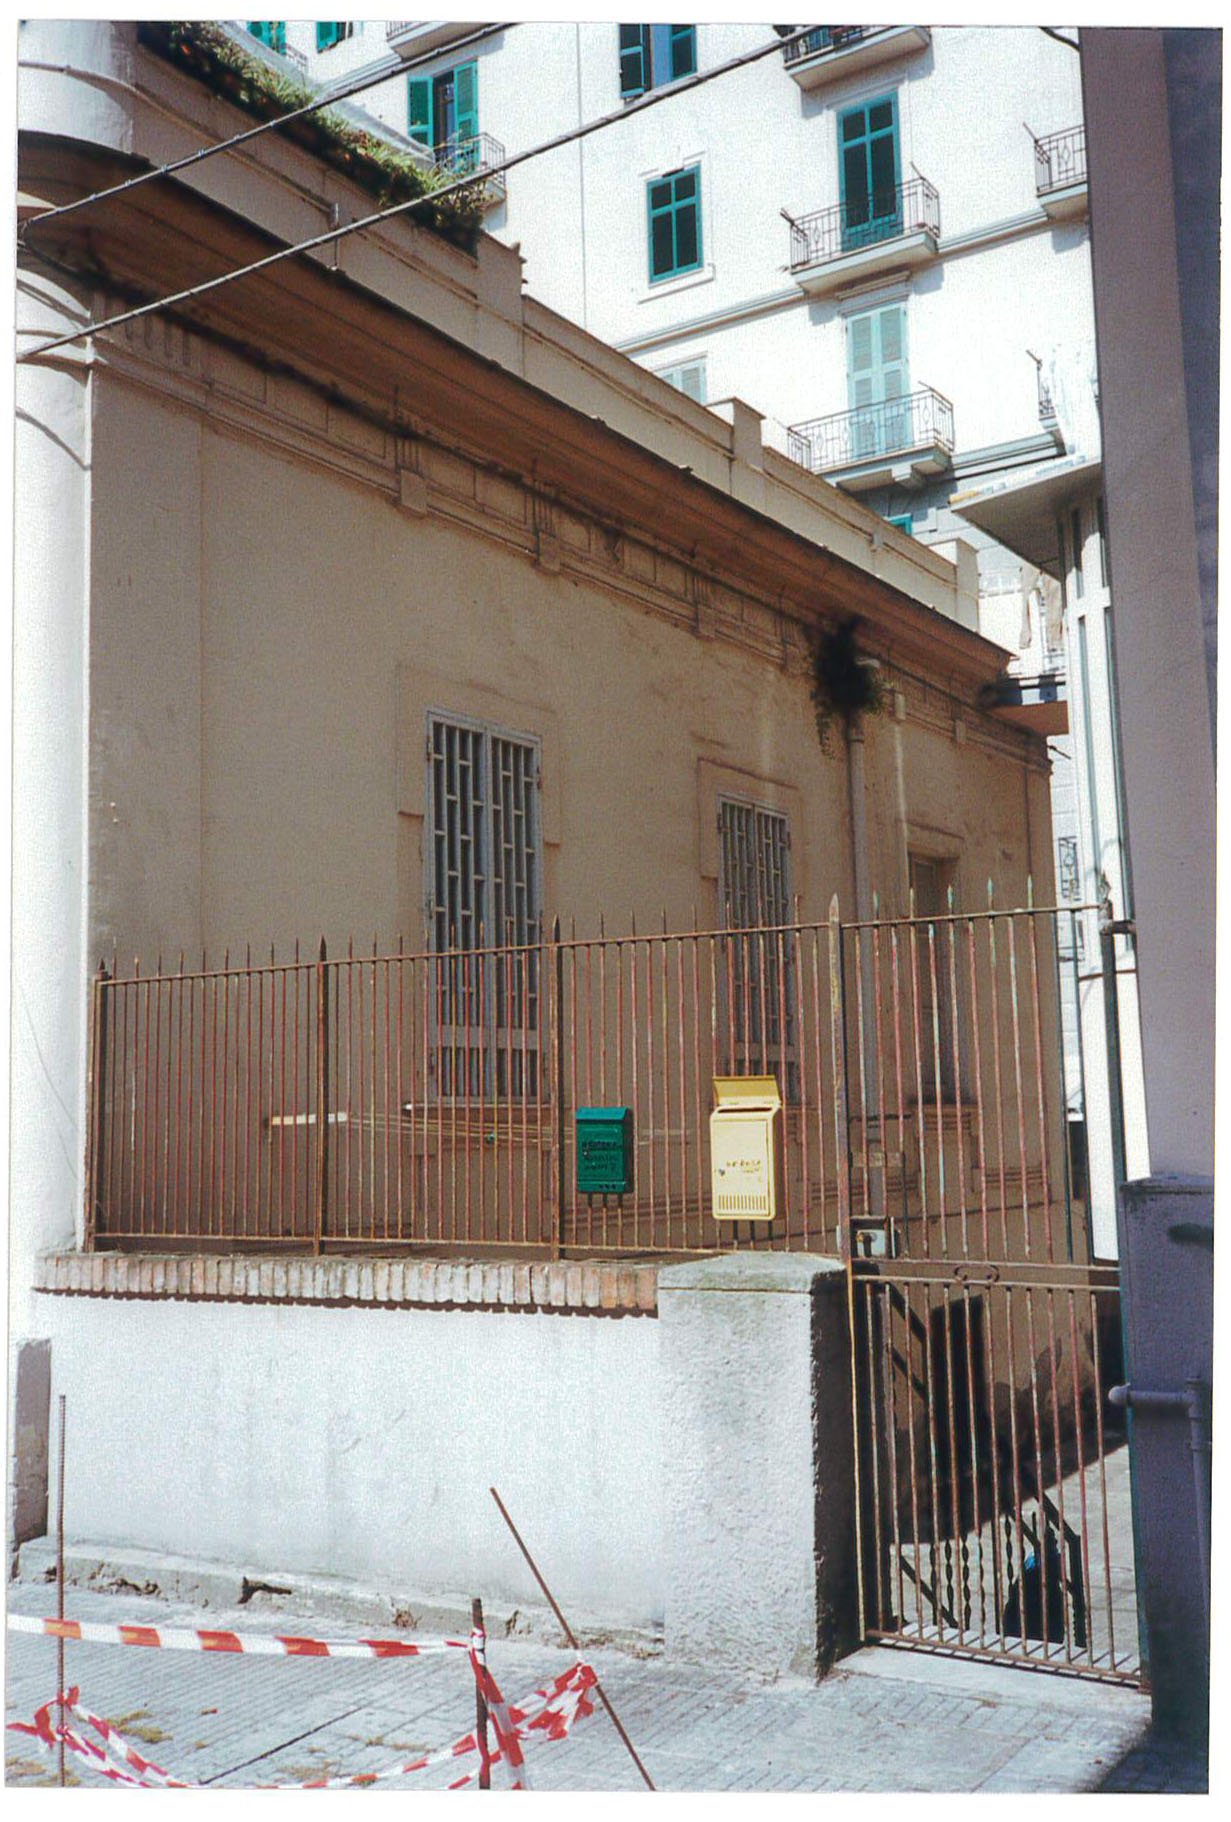 palazzina in via Francesco Solimene, 114 D (palazzina, civico) - Napoli (NA) 